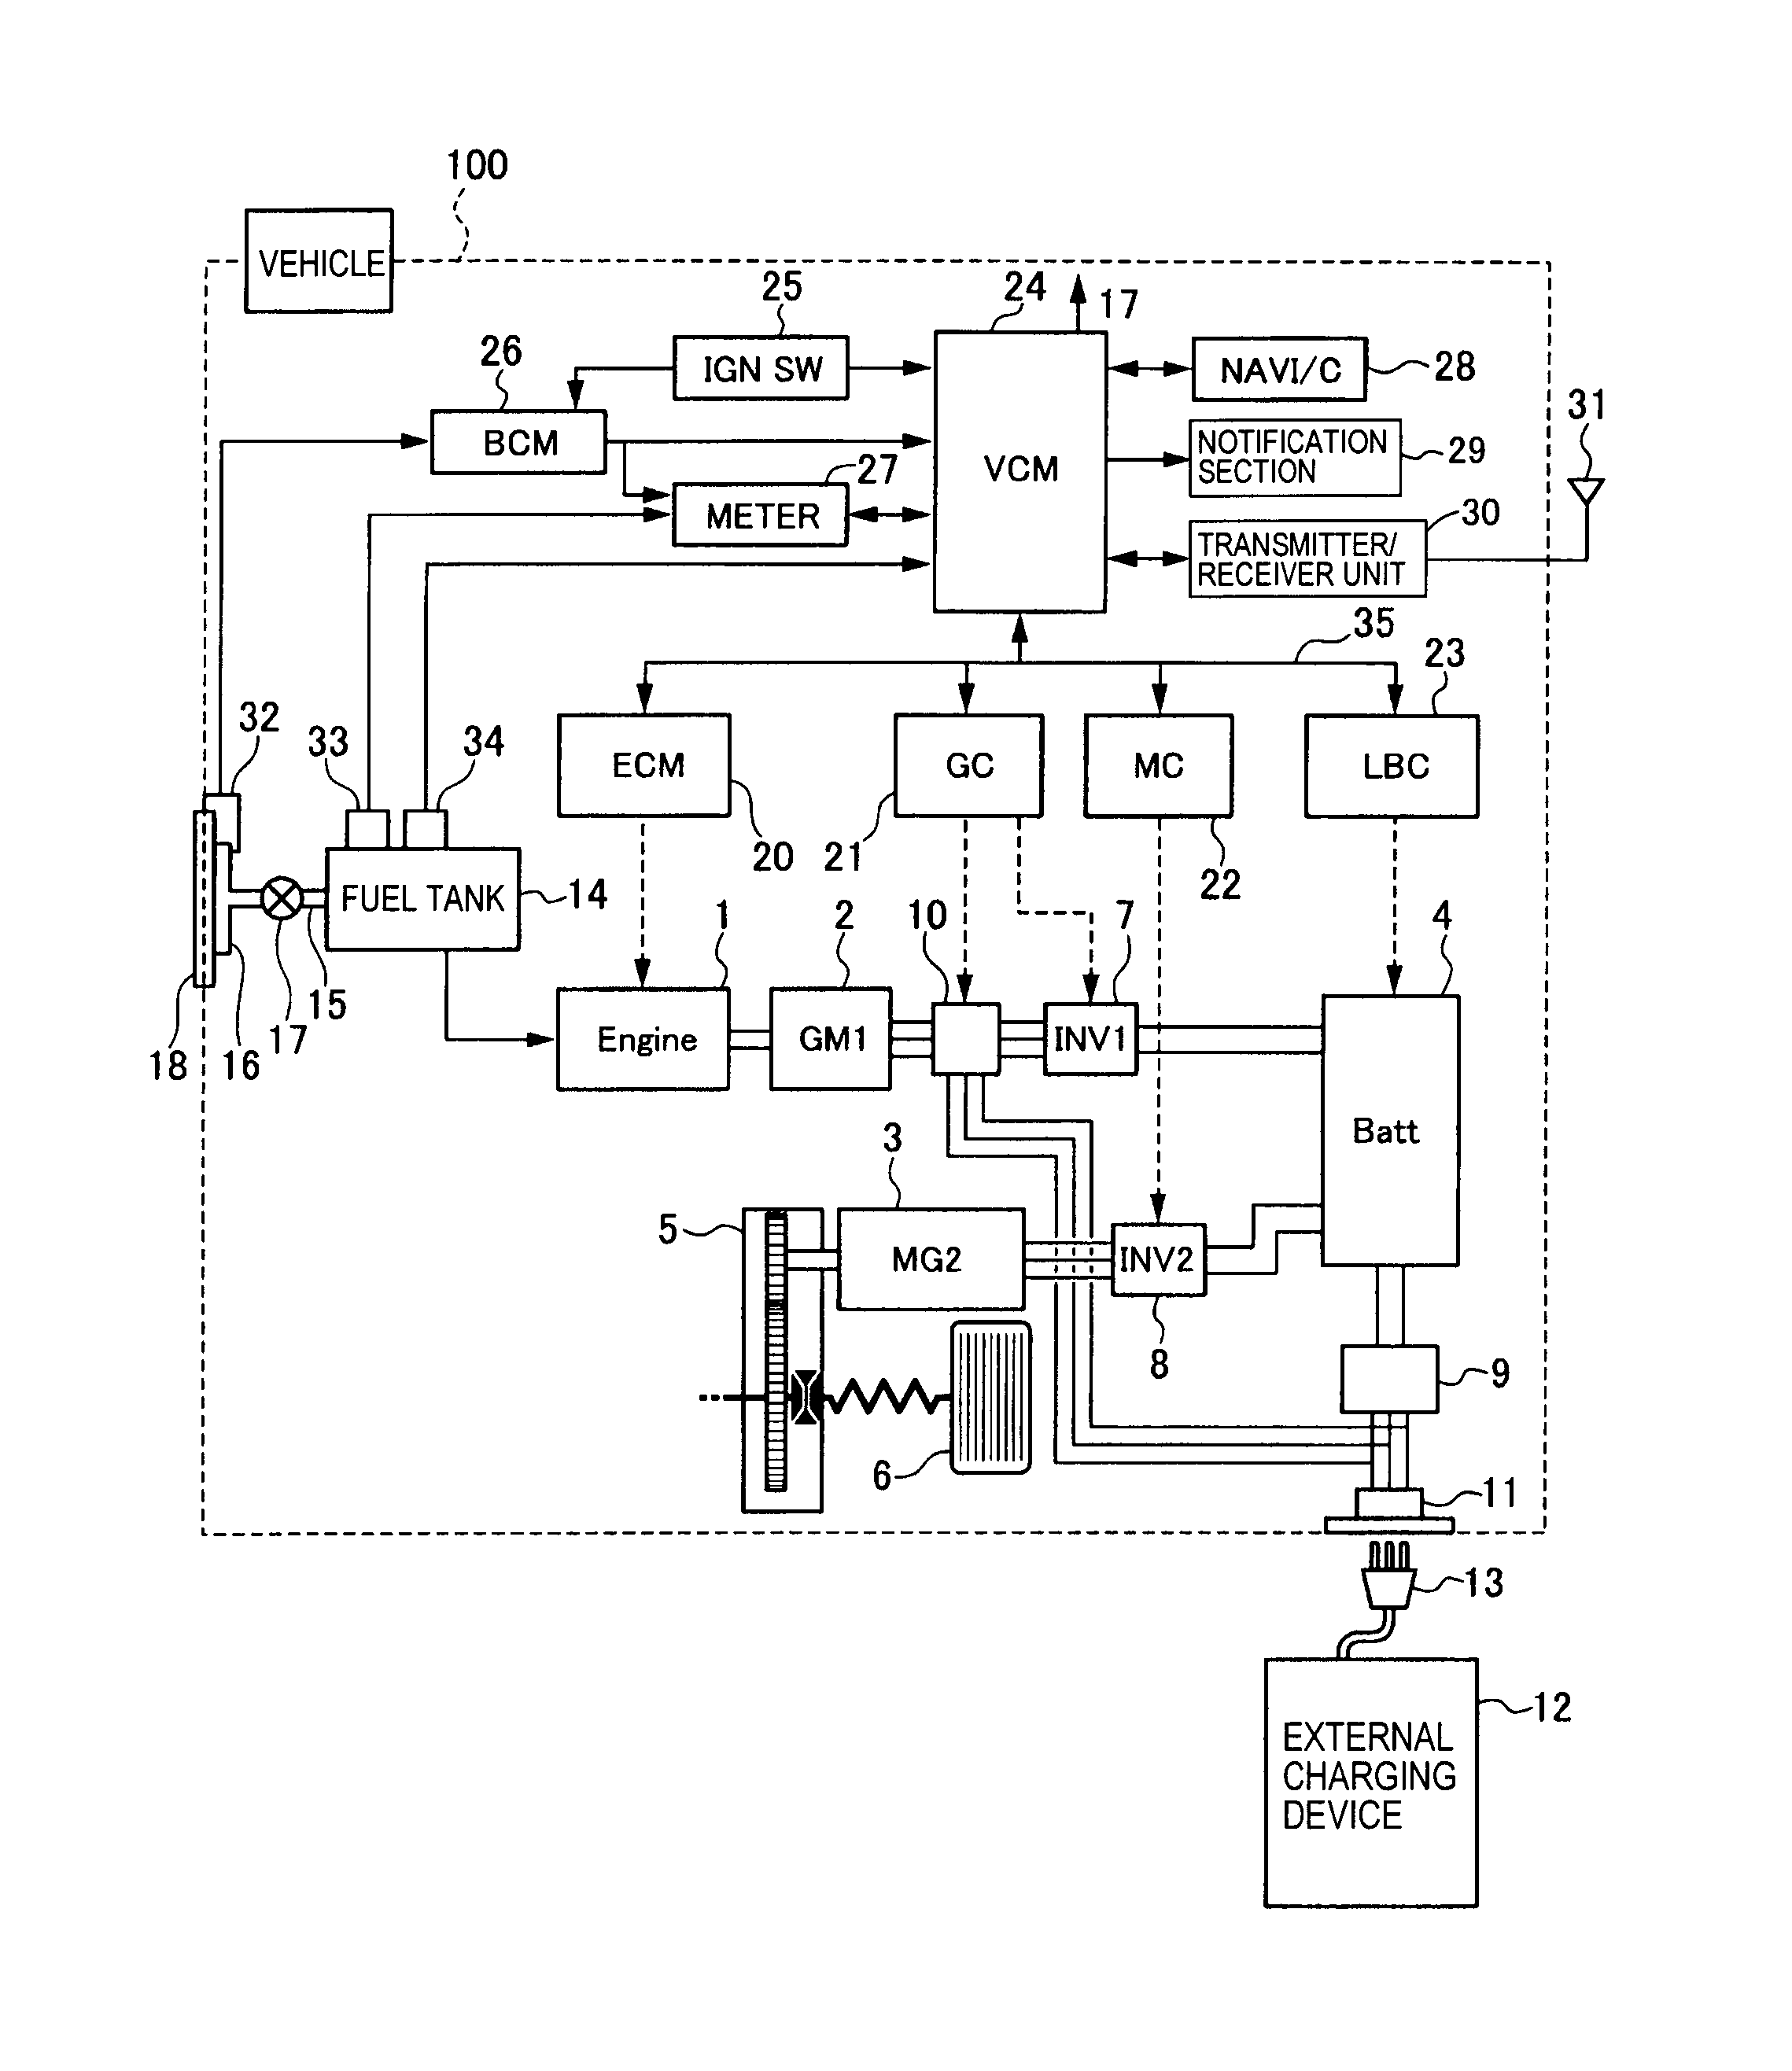 1999 jeep cherokee 4.0 liter wiring diagram for trailer hookup